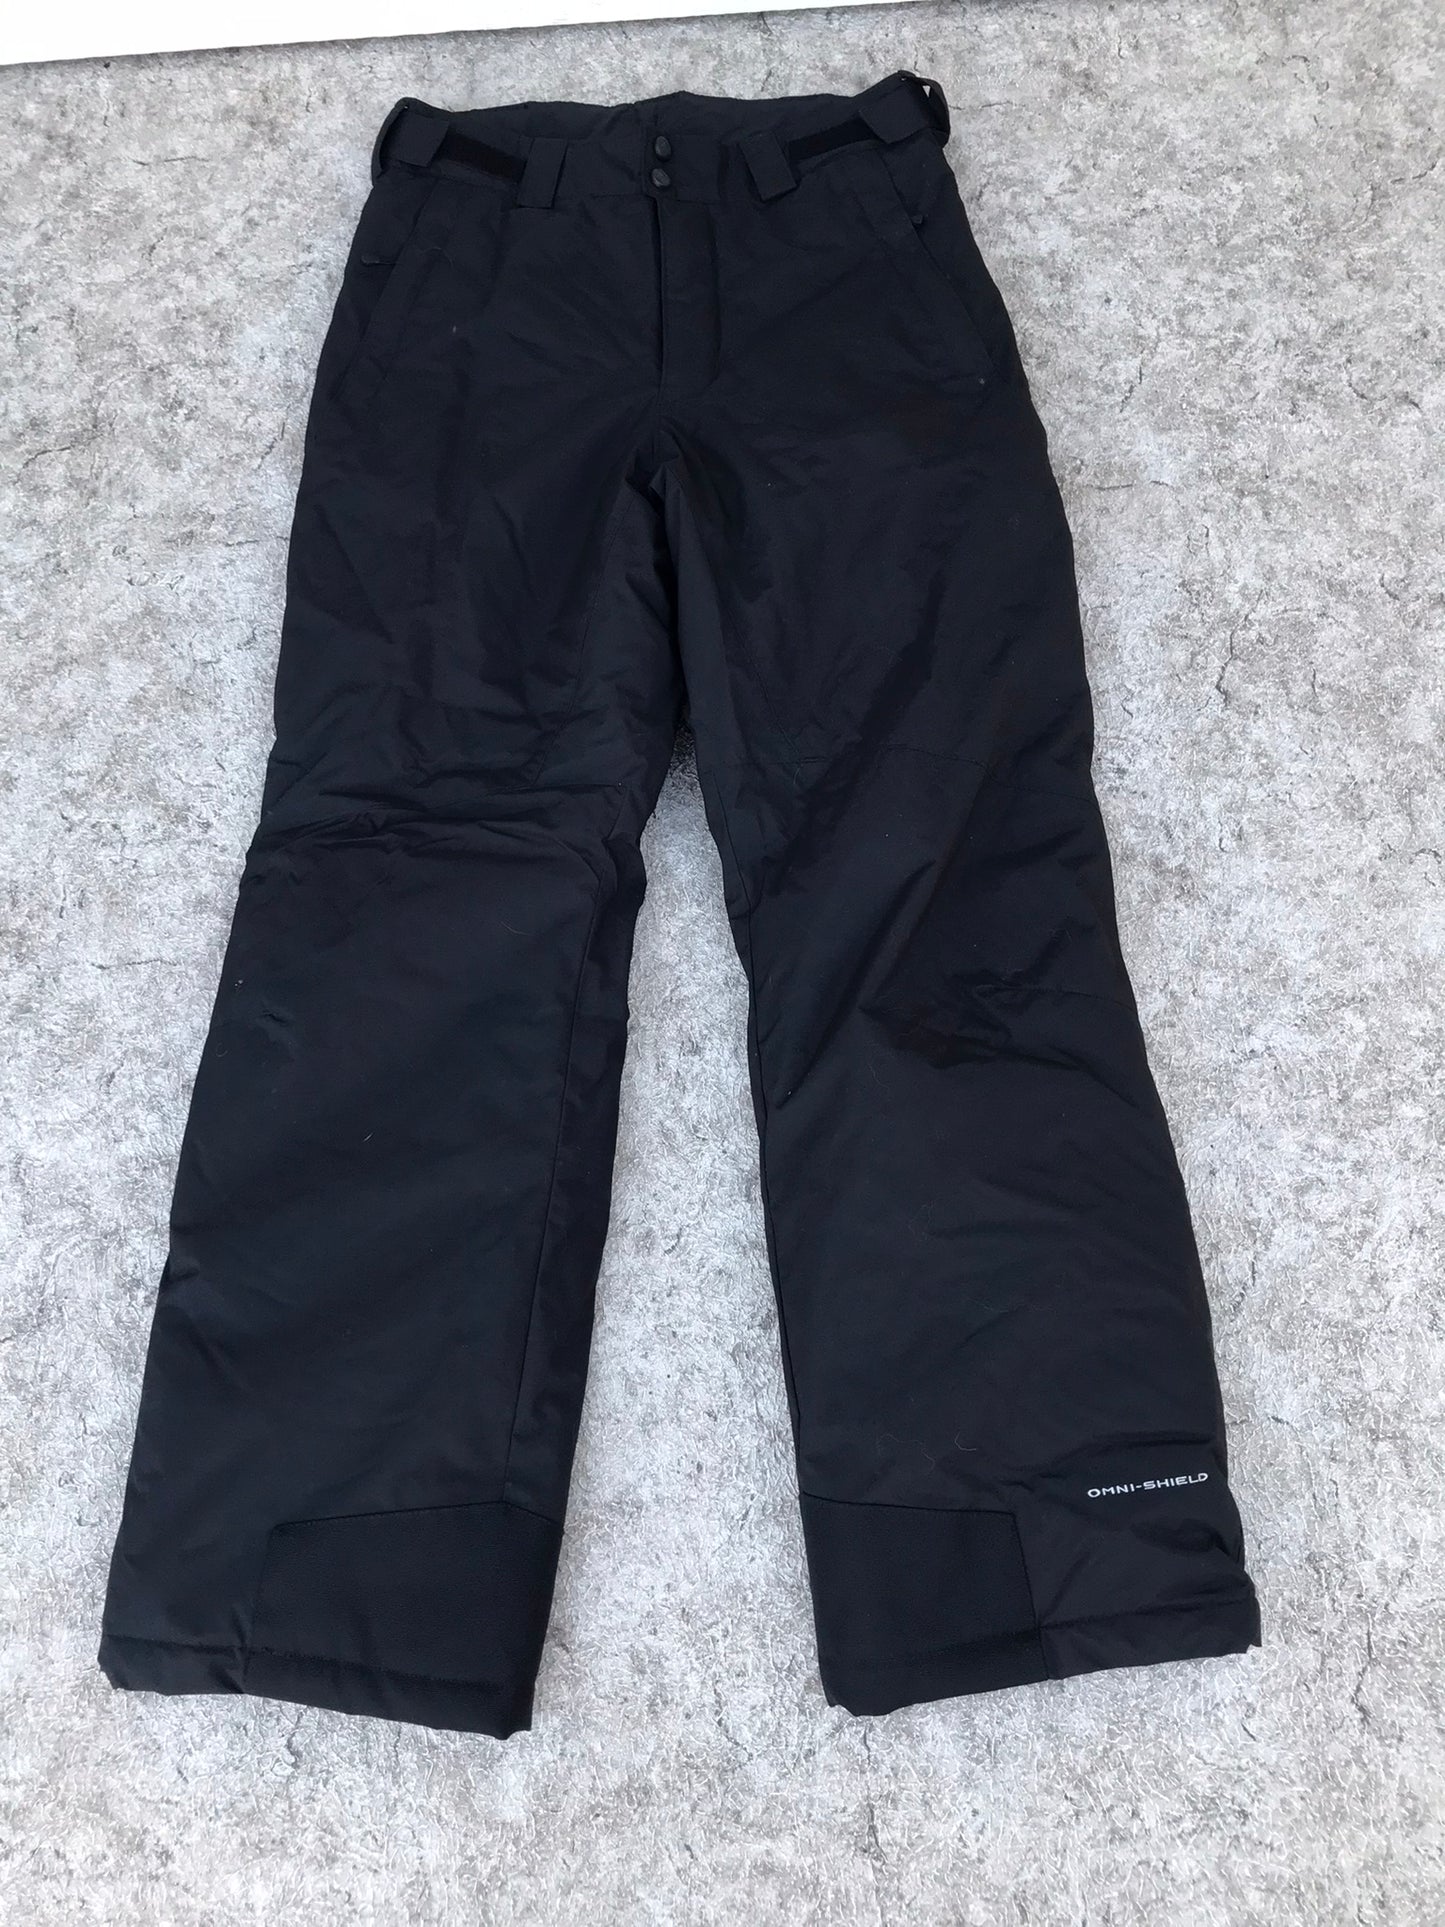 Snow Pants Men's Size Small Columbia Waterproof Black Like New